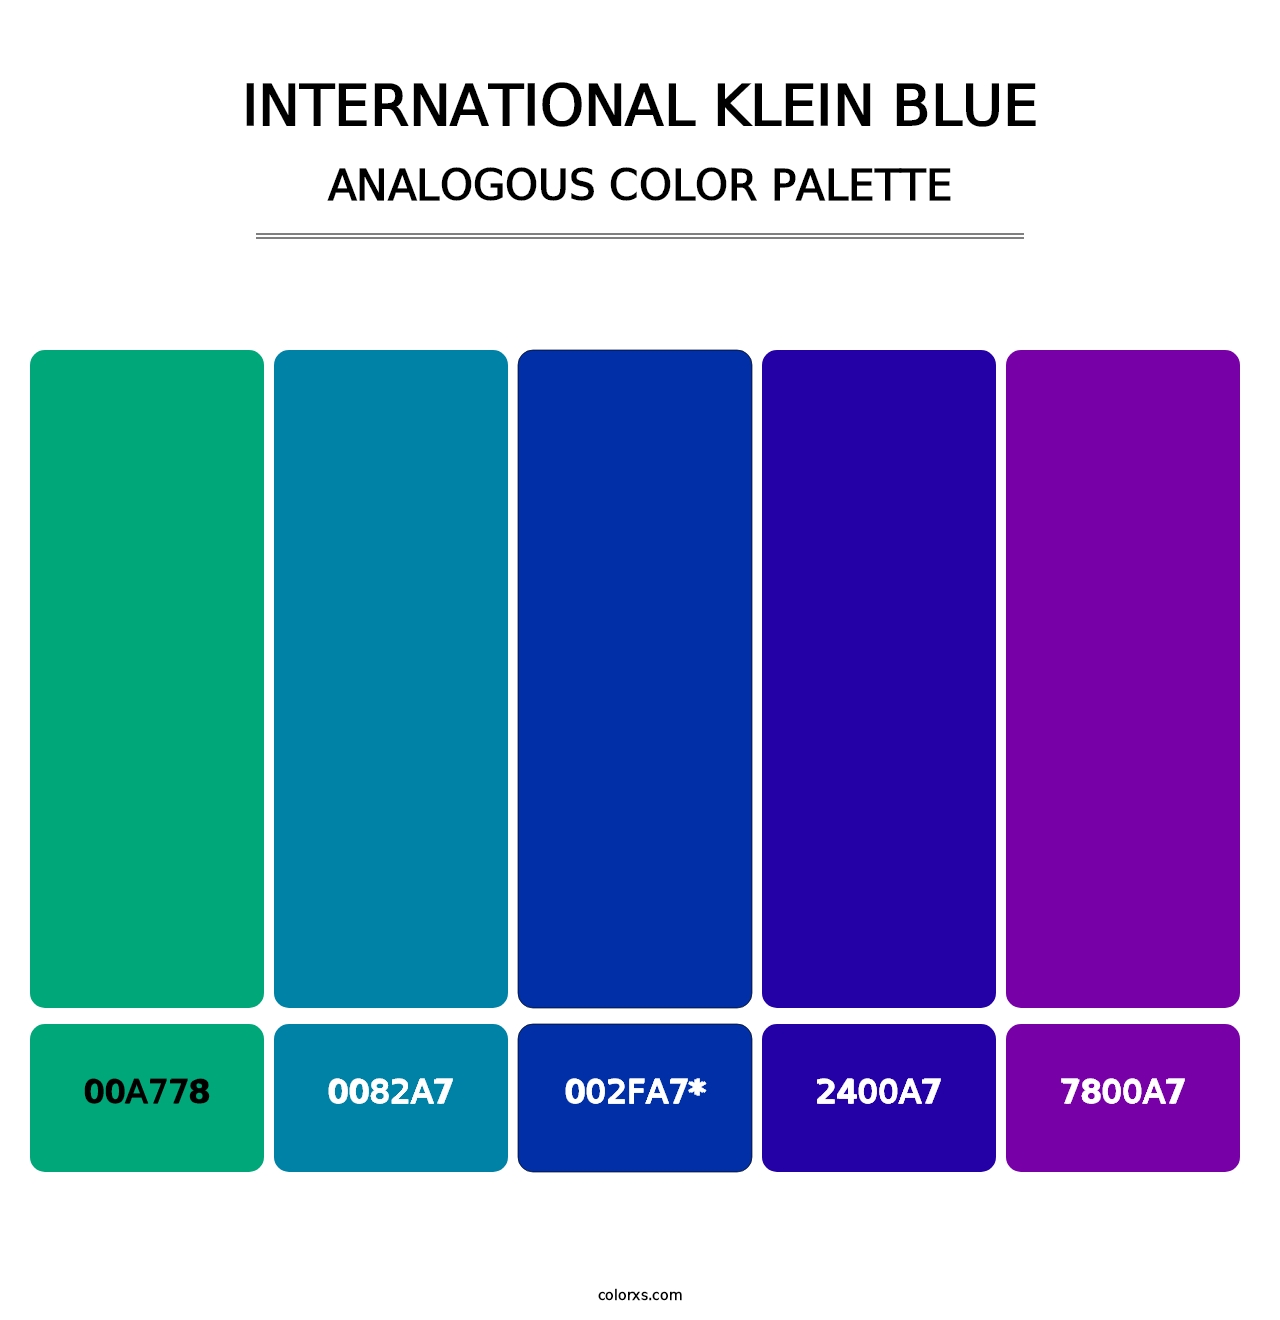 International Klein Blue - Analogous Color Palette